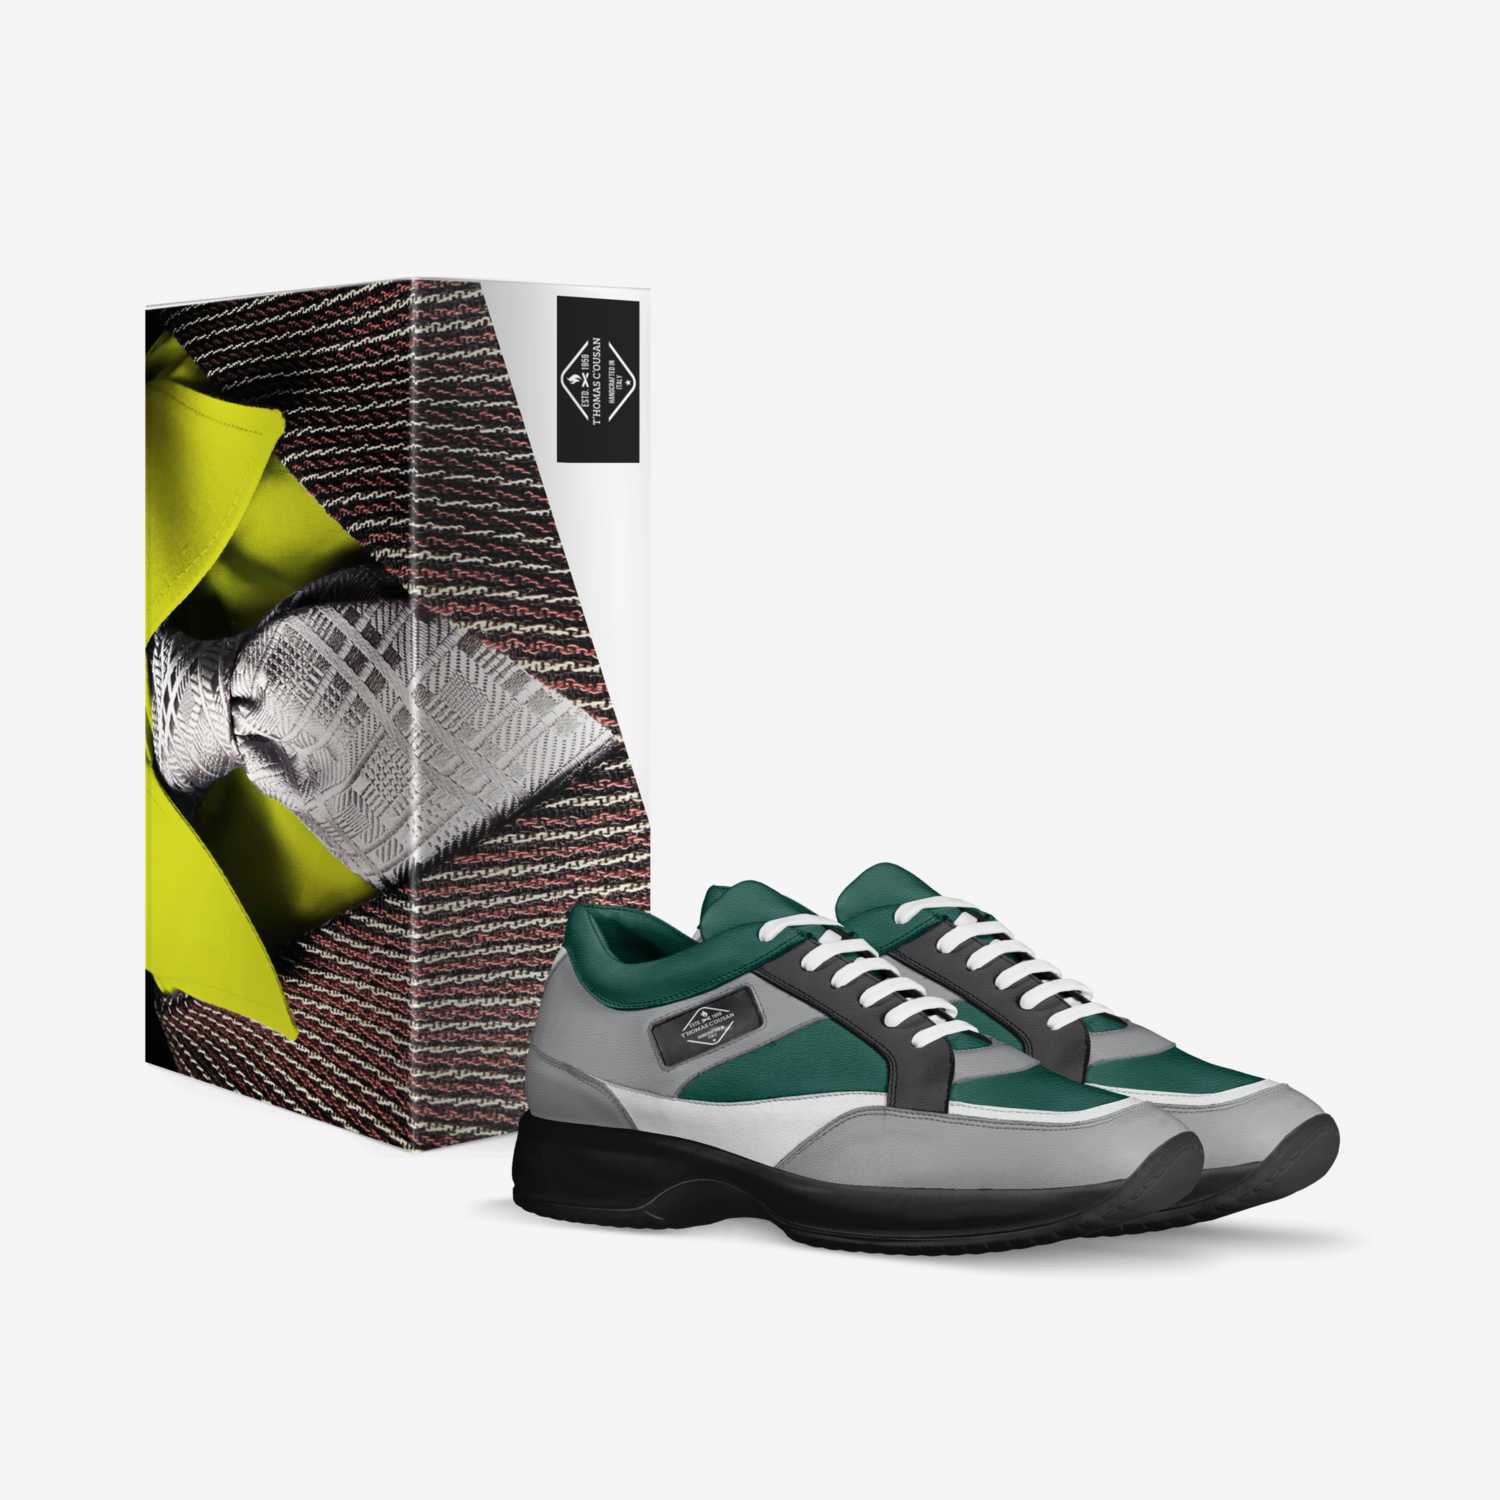 T'homas C'ousan custom made in Italy shoes by Darel Cousan | Box view